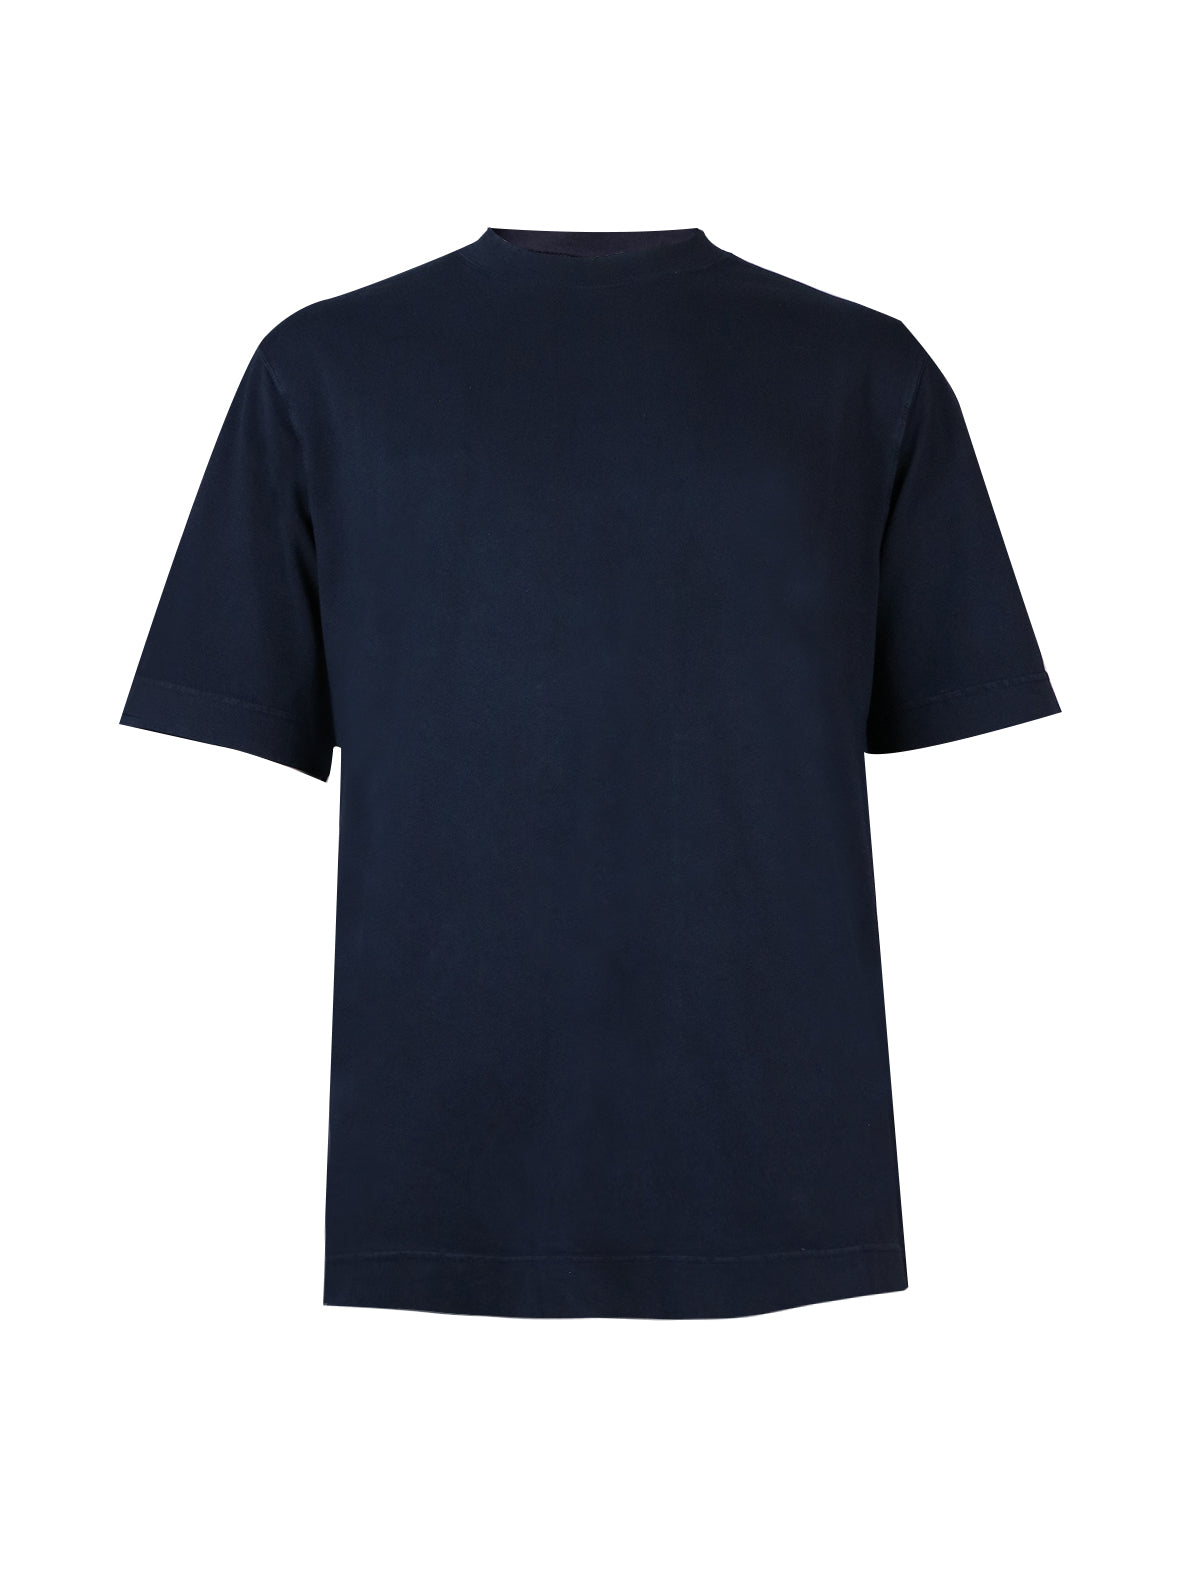 CIRCOLO 1901 Cotton Jersey T-Shirt in Blue Black